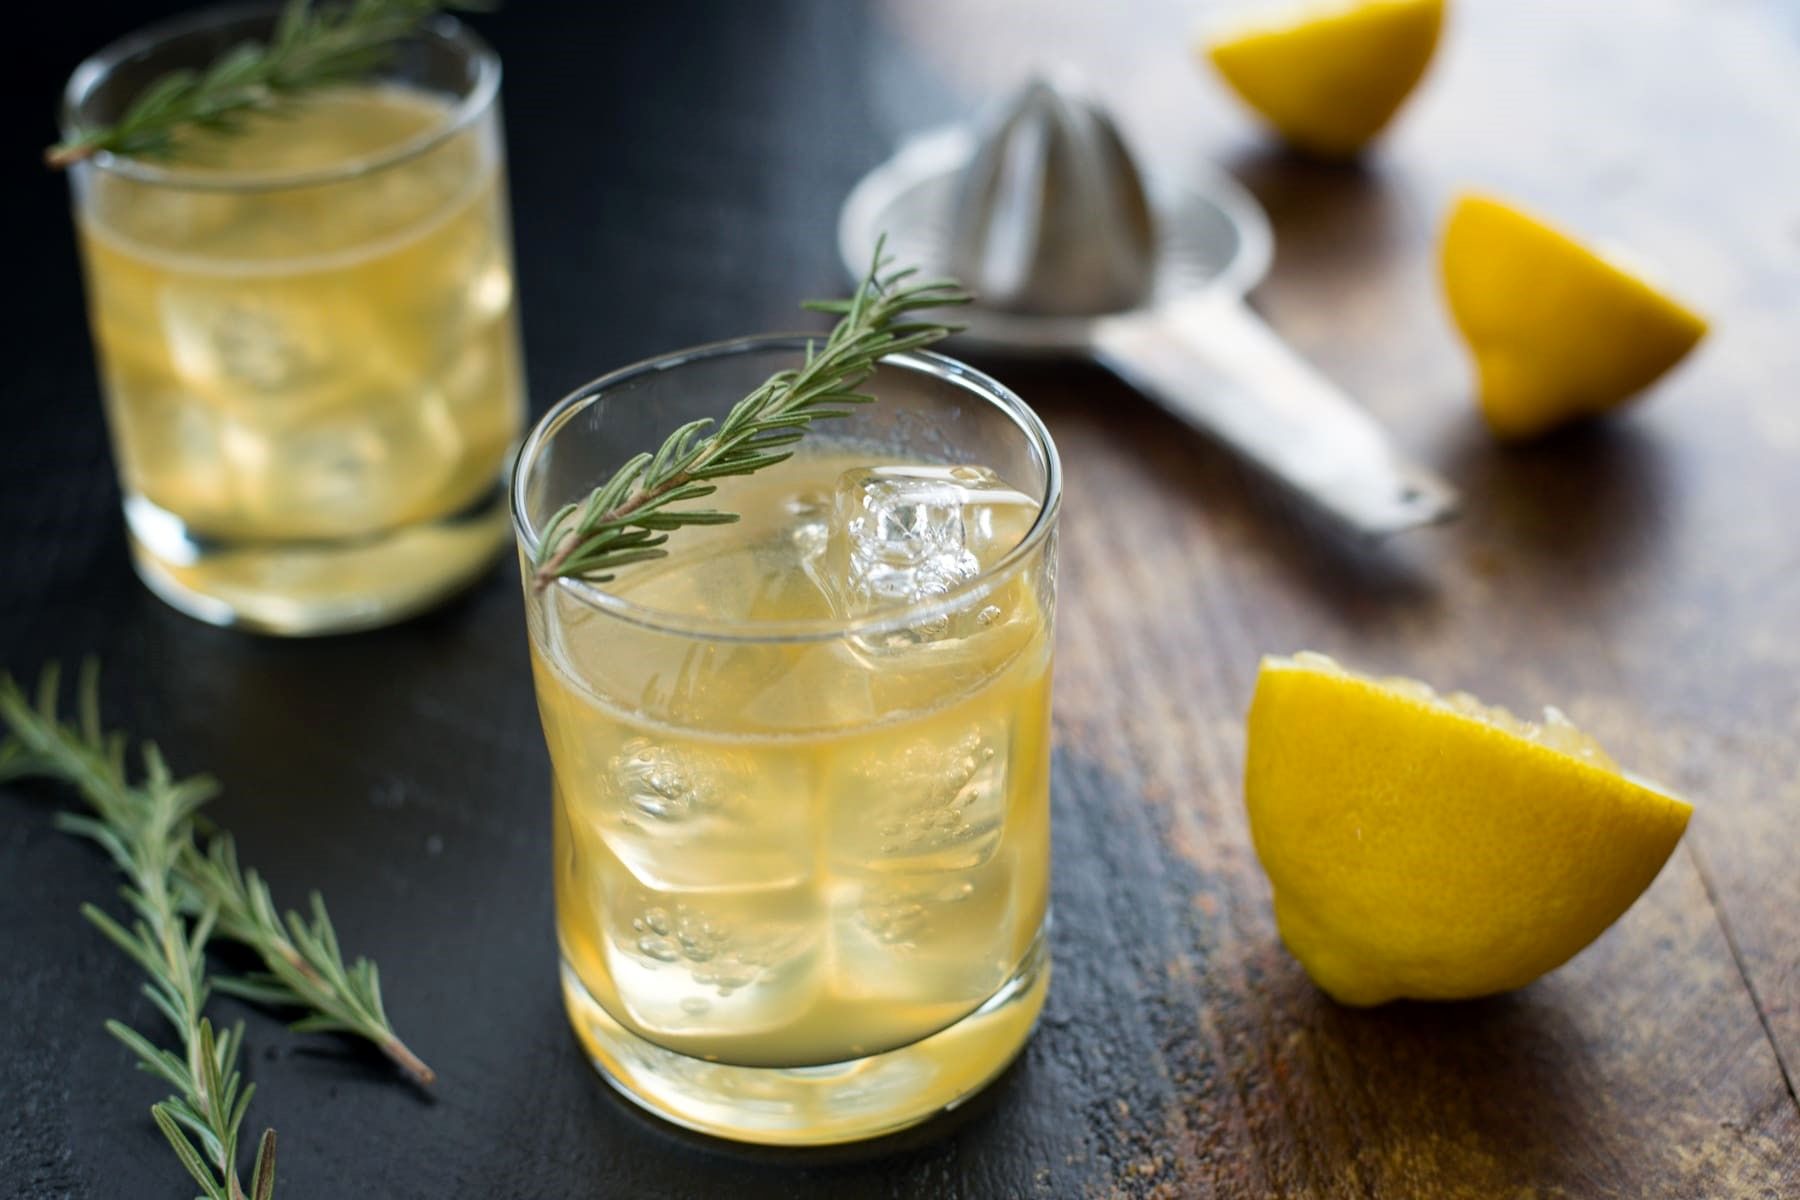 طبع لیمو ترش + خواص چای لیمو عمانی + تعبیر خواب لیمو شیرین